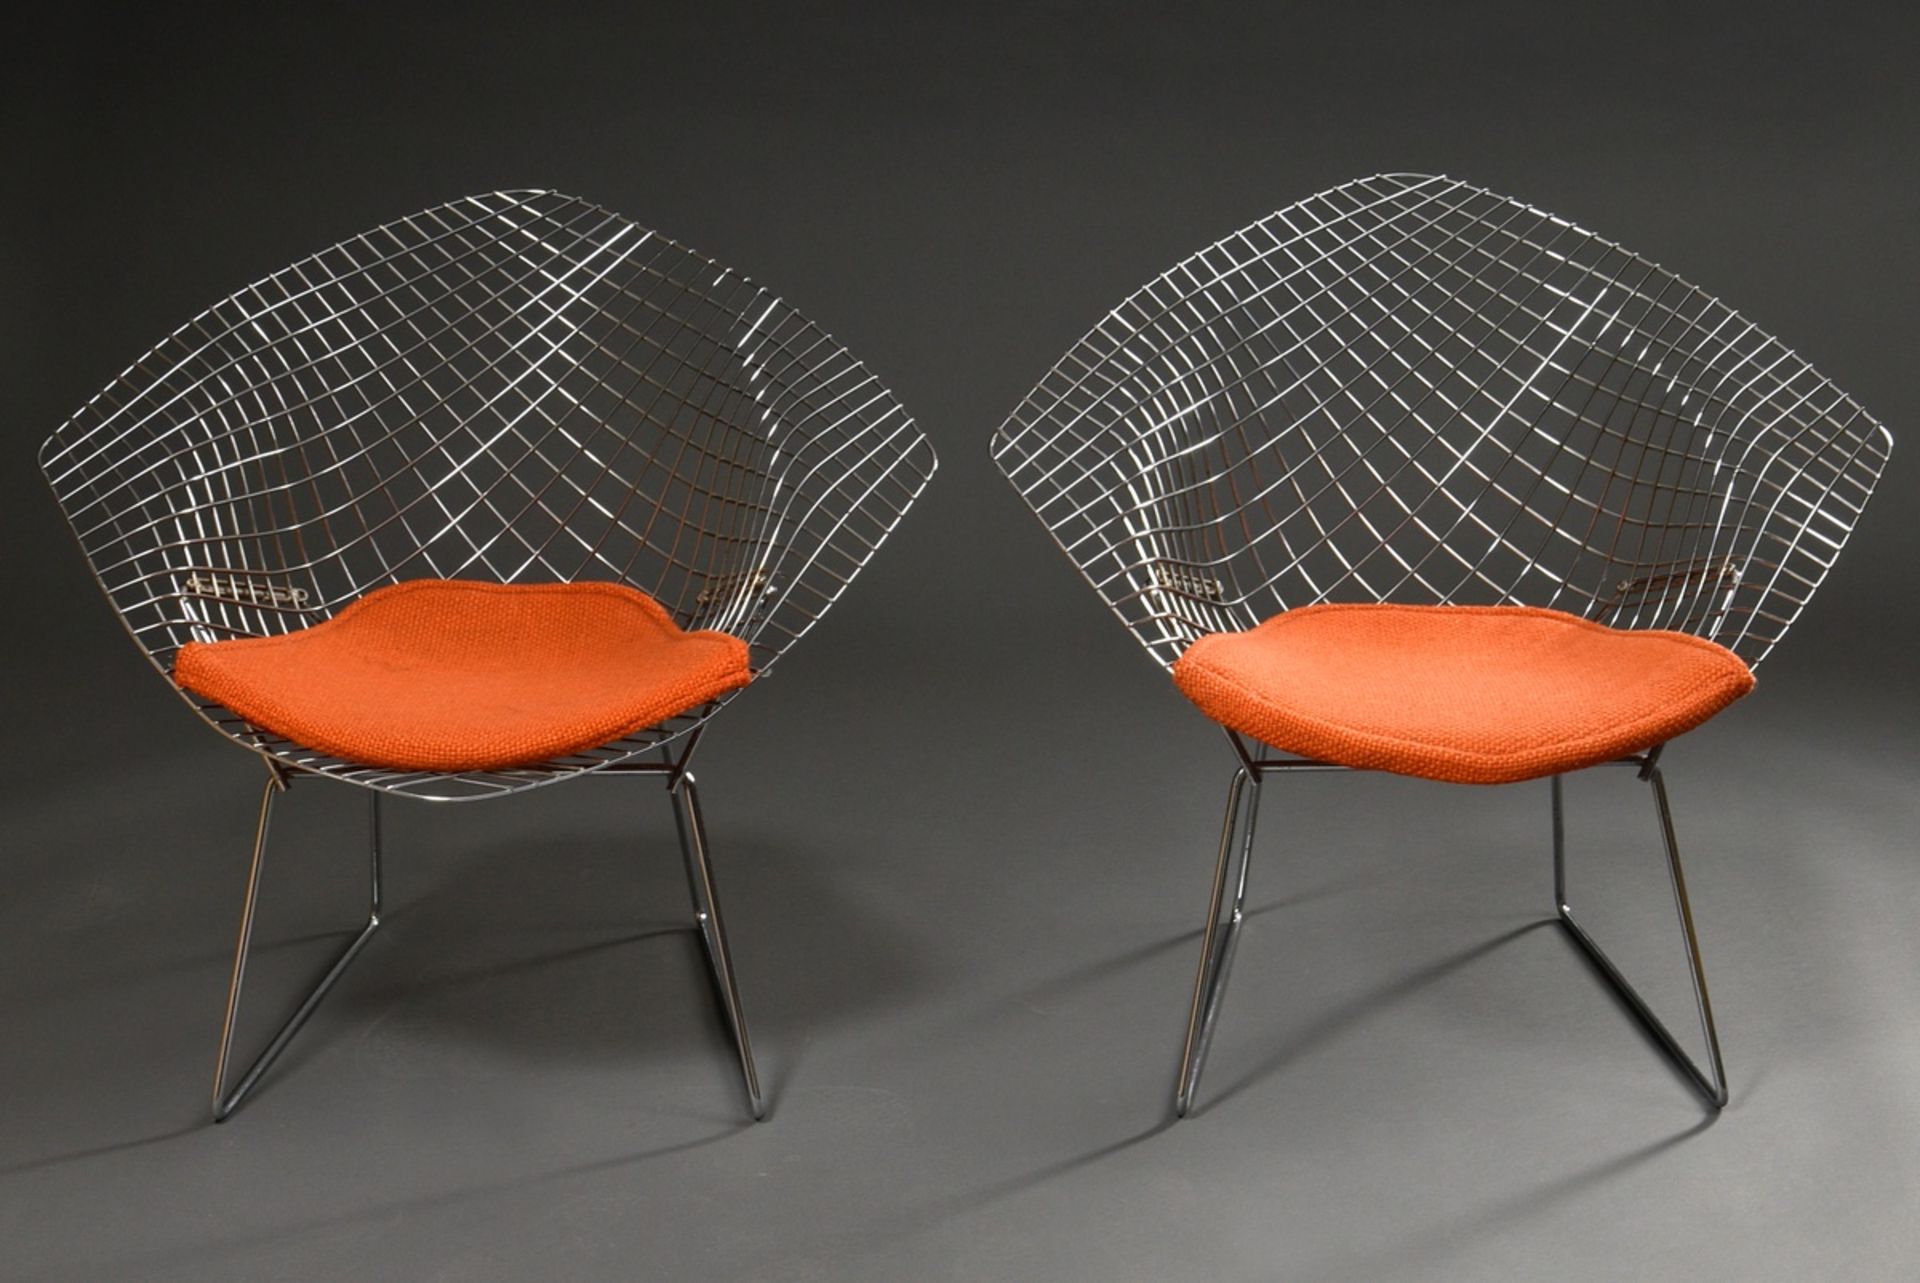 2 armchair "Diamond Chair", design: Harry Bertoia 1952 for Knoll International, chromed steel wire  - Image 2 of 7